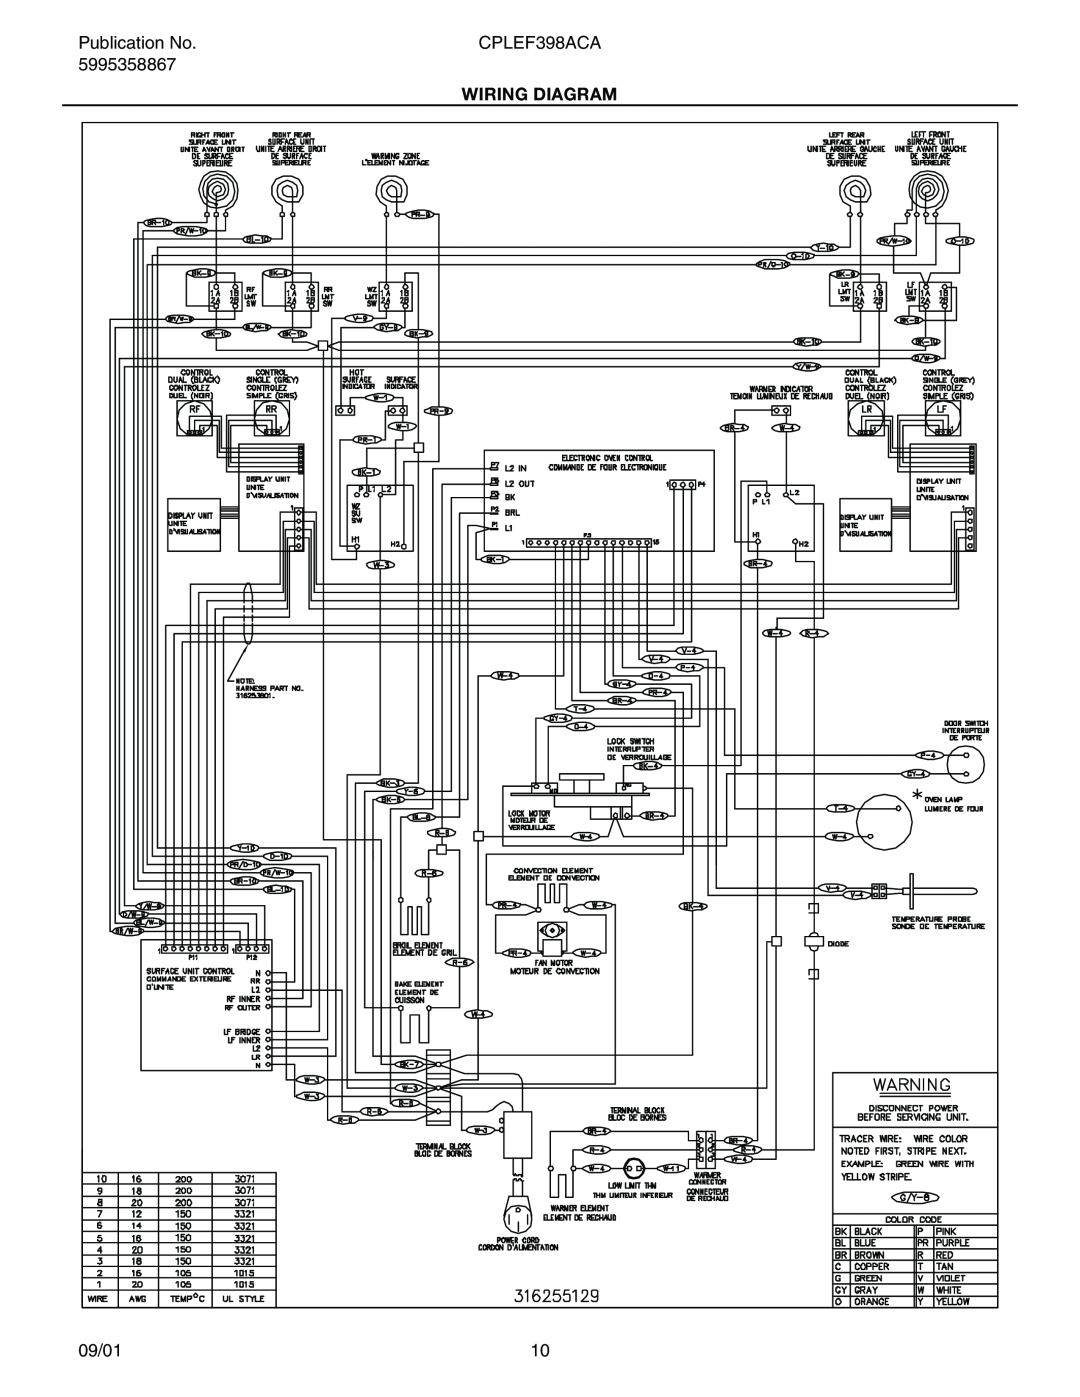 Electrolux installation instructions Publication No, CPLEF398ACA, 5995358867, Wiring Diagram, 09/01 